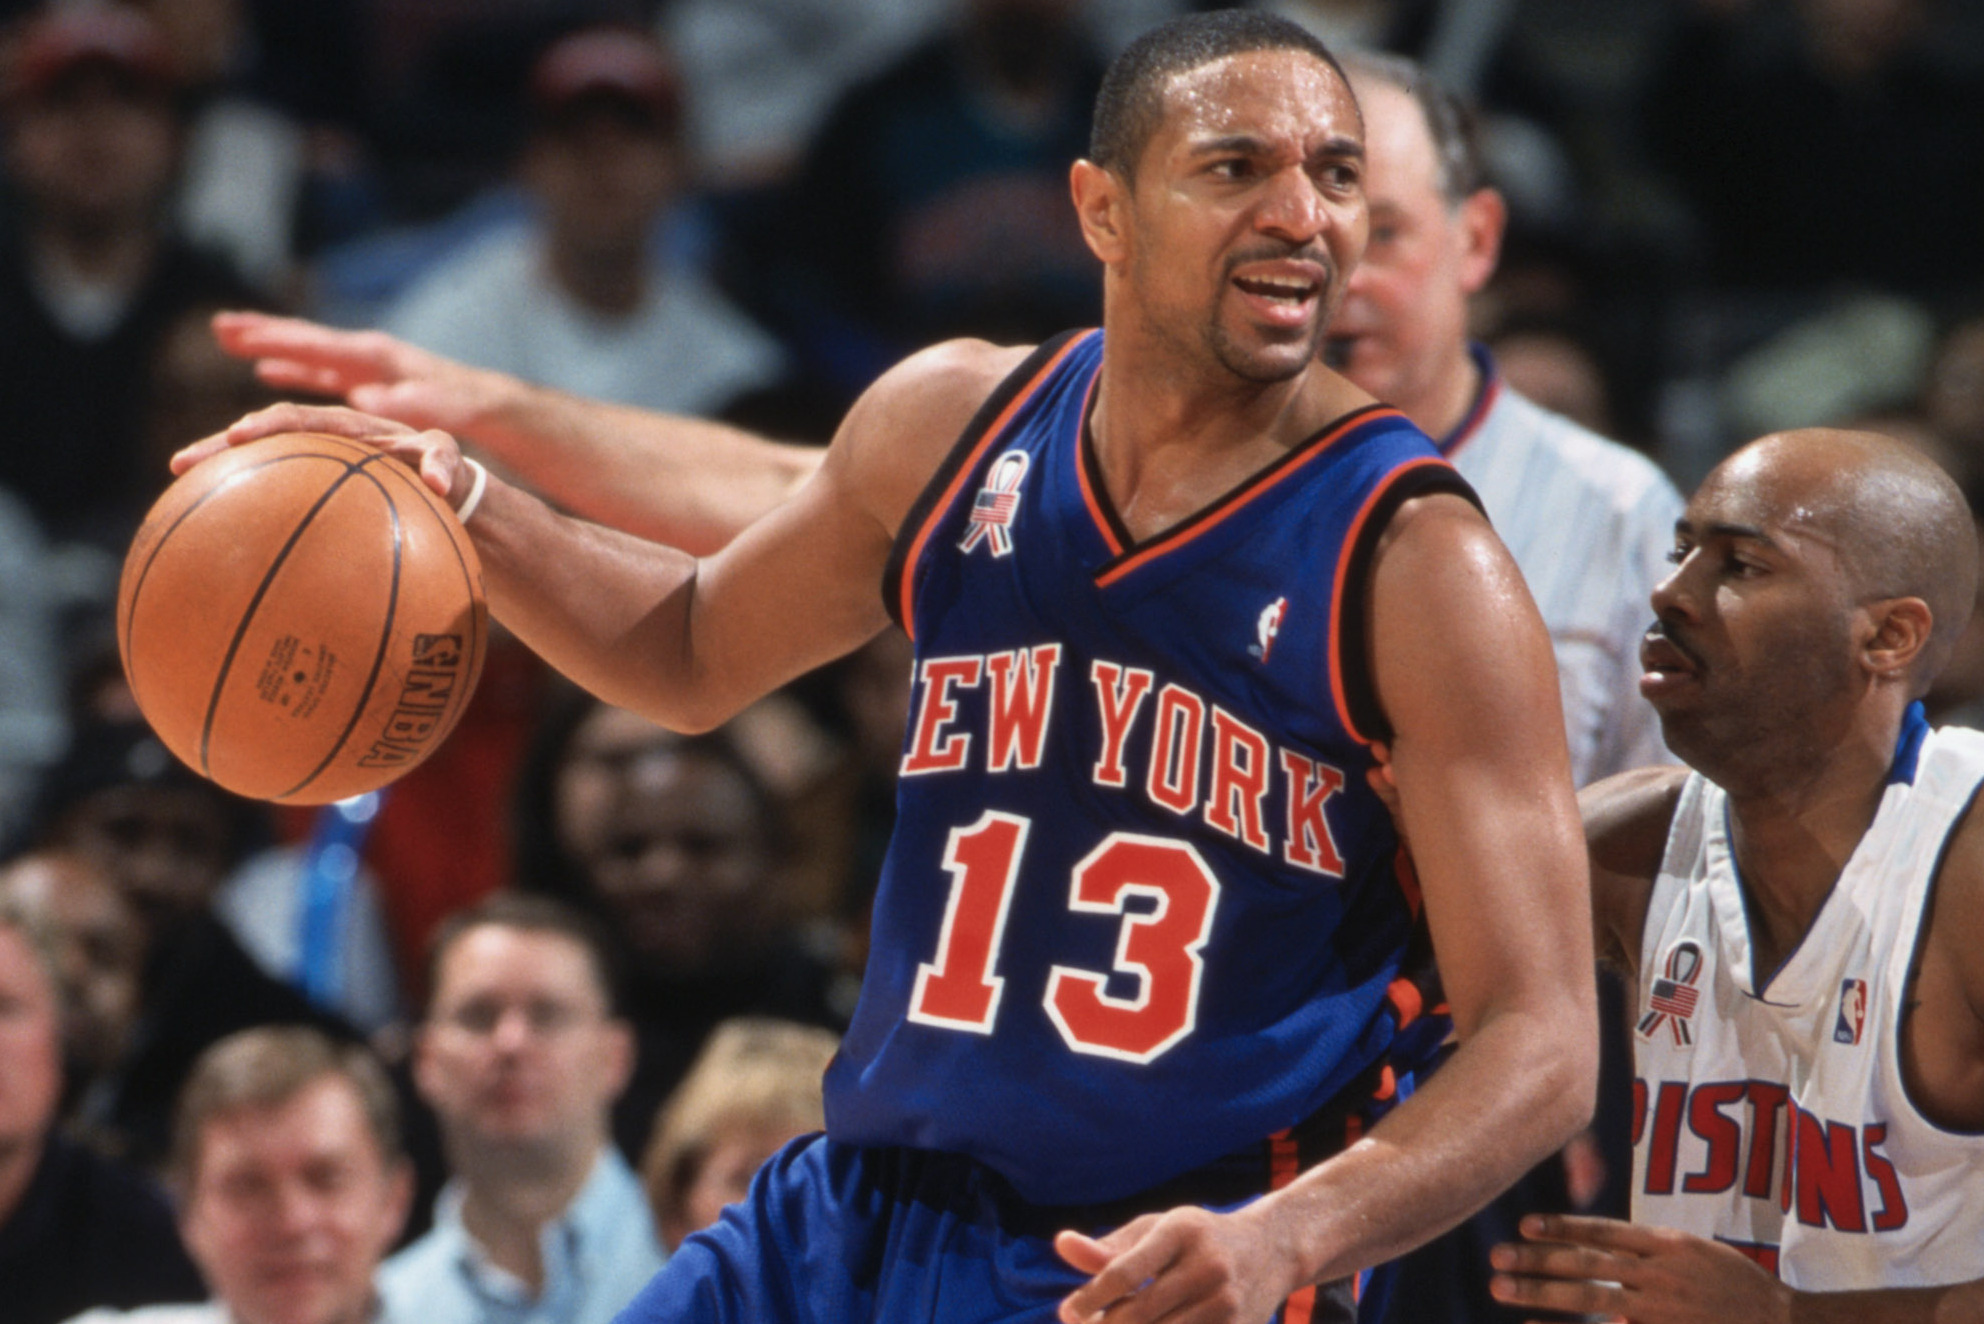 All-Time New York Knicks Team